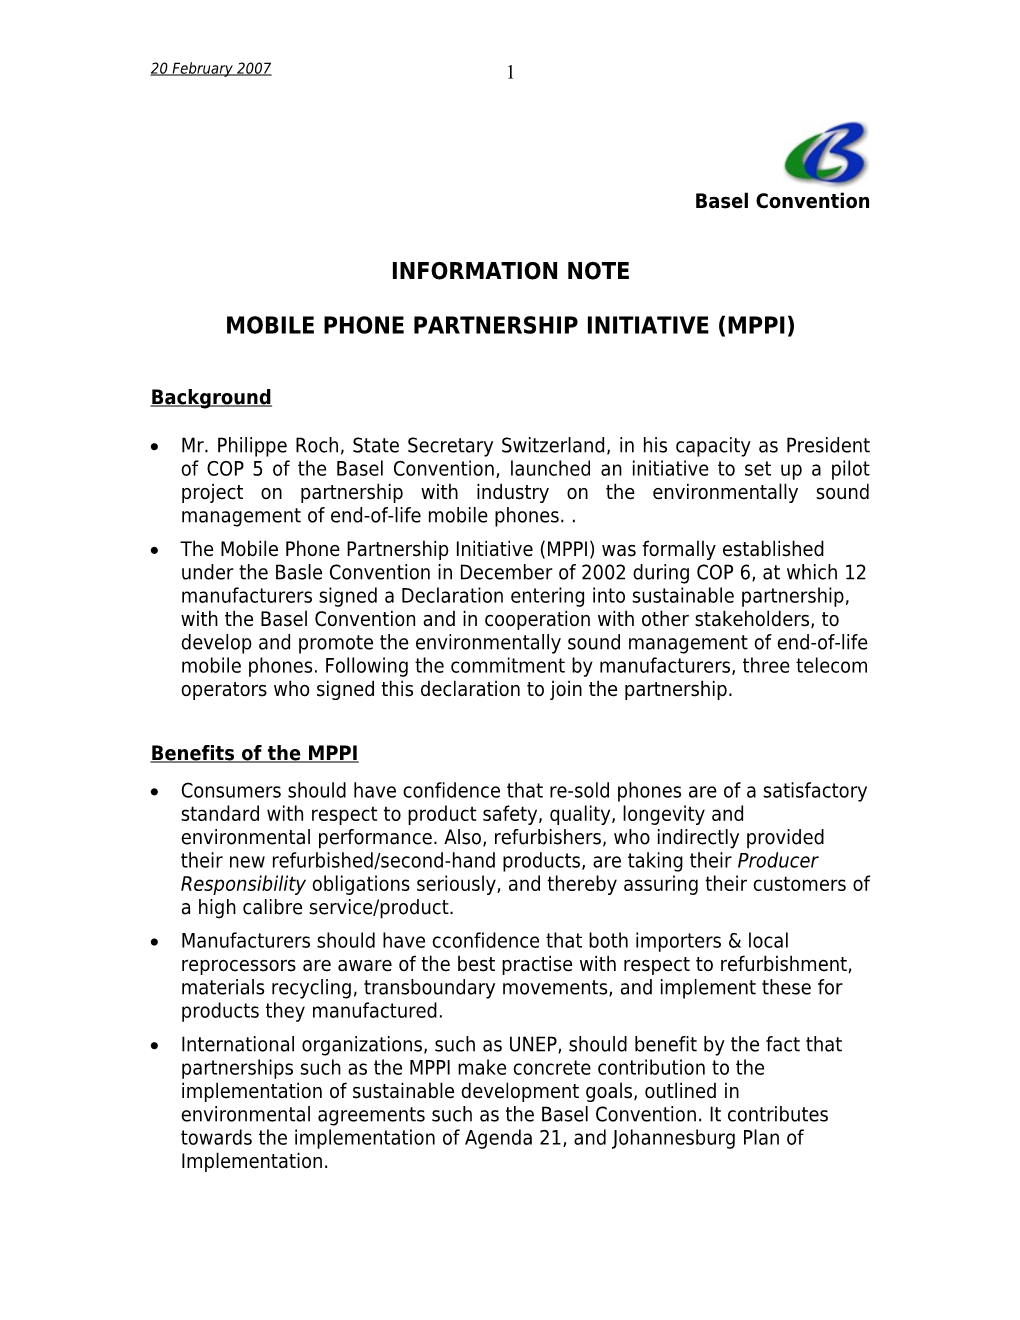 Mobile Phone Partnership Initiative (Mppi)